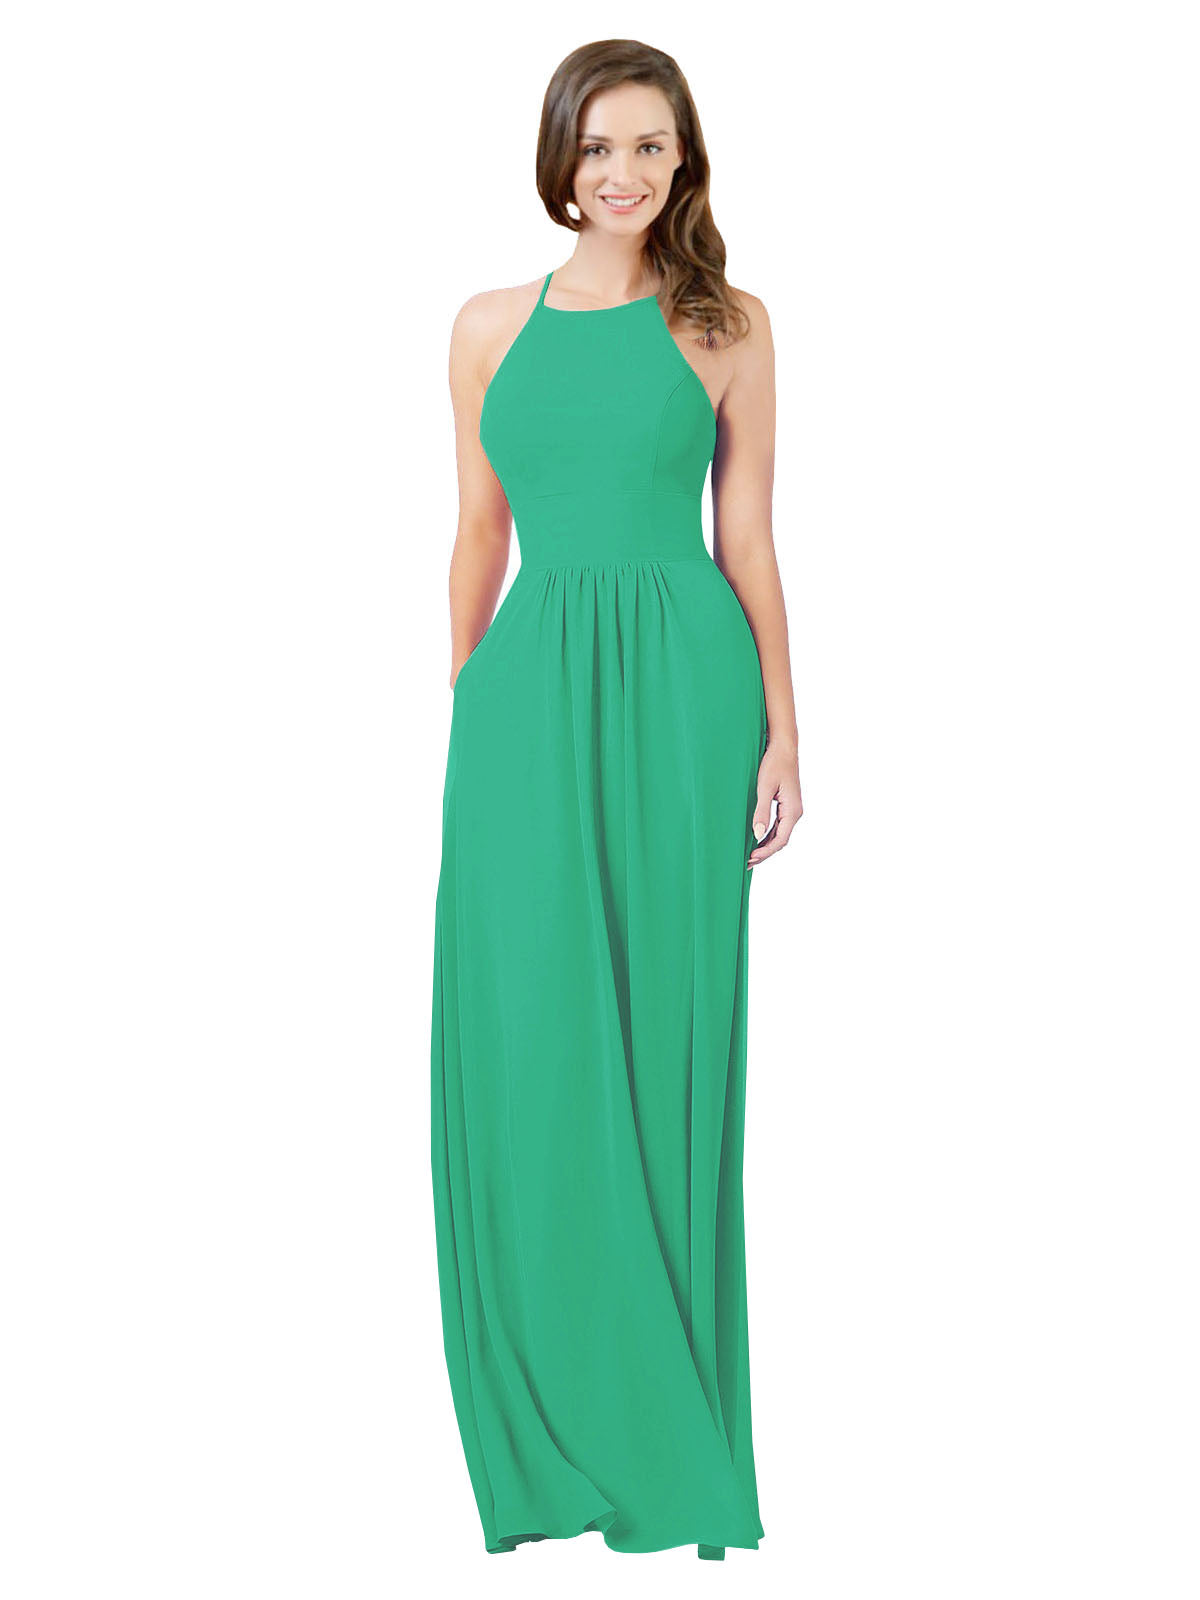 Emerald Green A-Line Halter Sleeveless Long Bridesmaid Dress Cindy